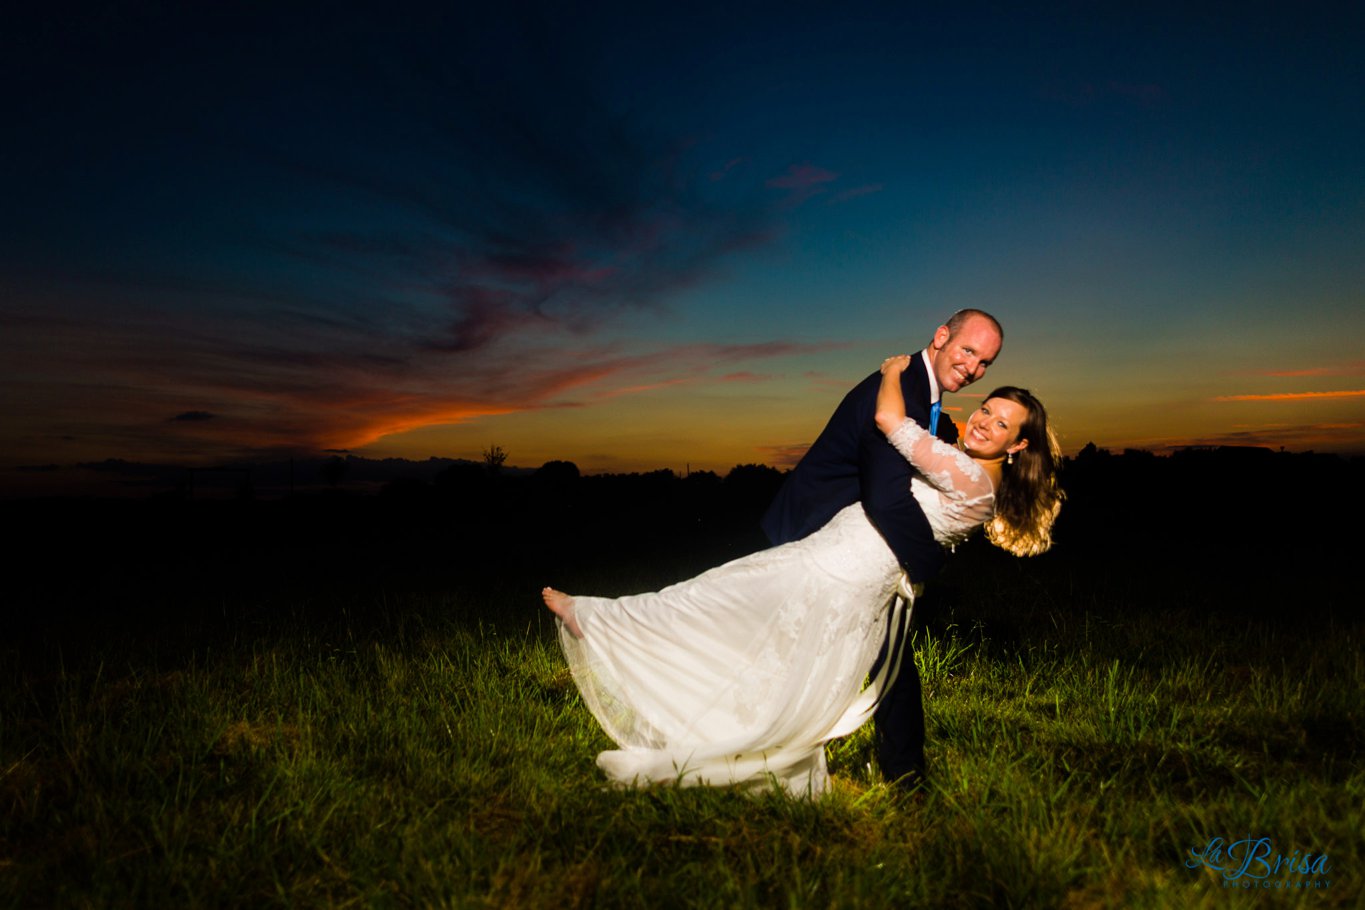 Kate & Robert | Wedding Photography Preview | Houston, TX | Chris Hsieh